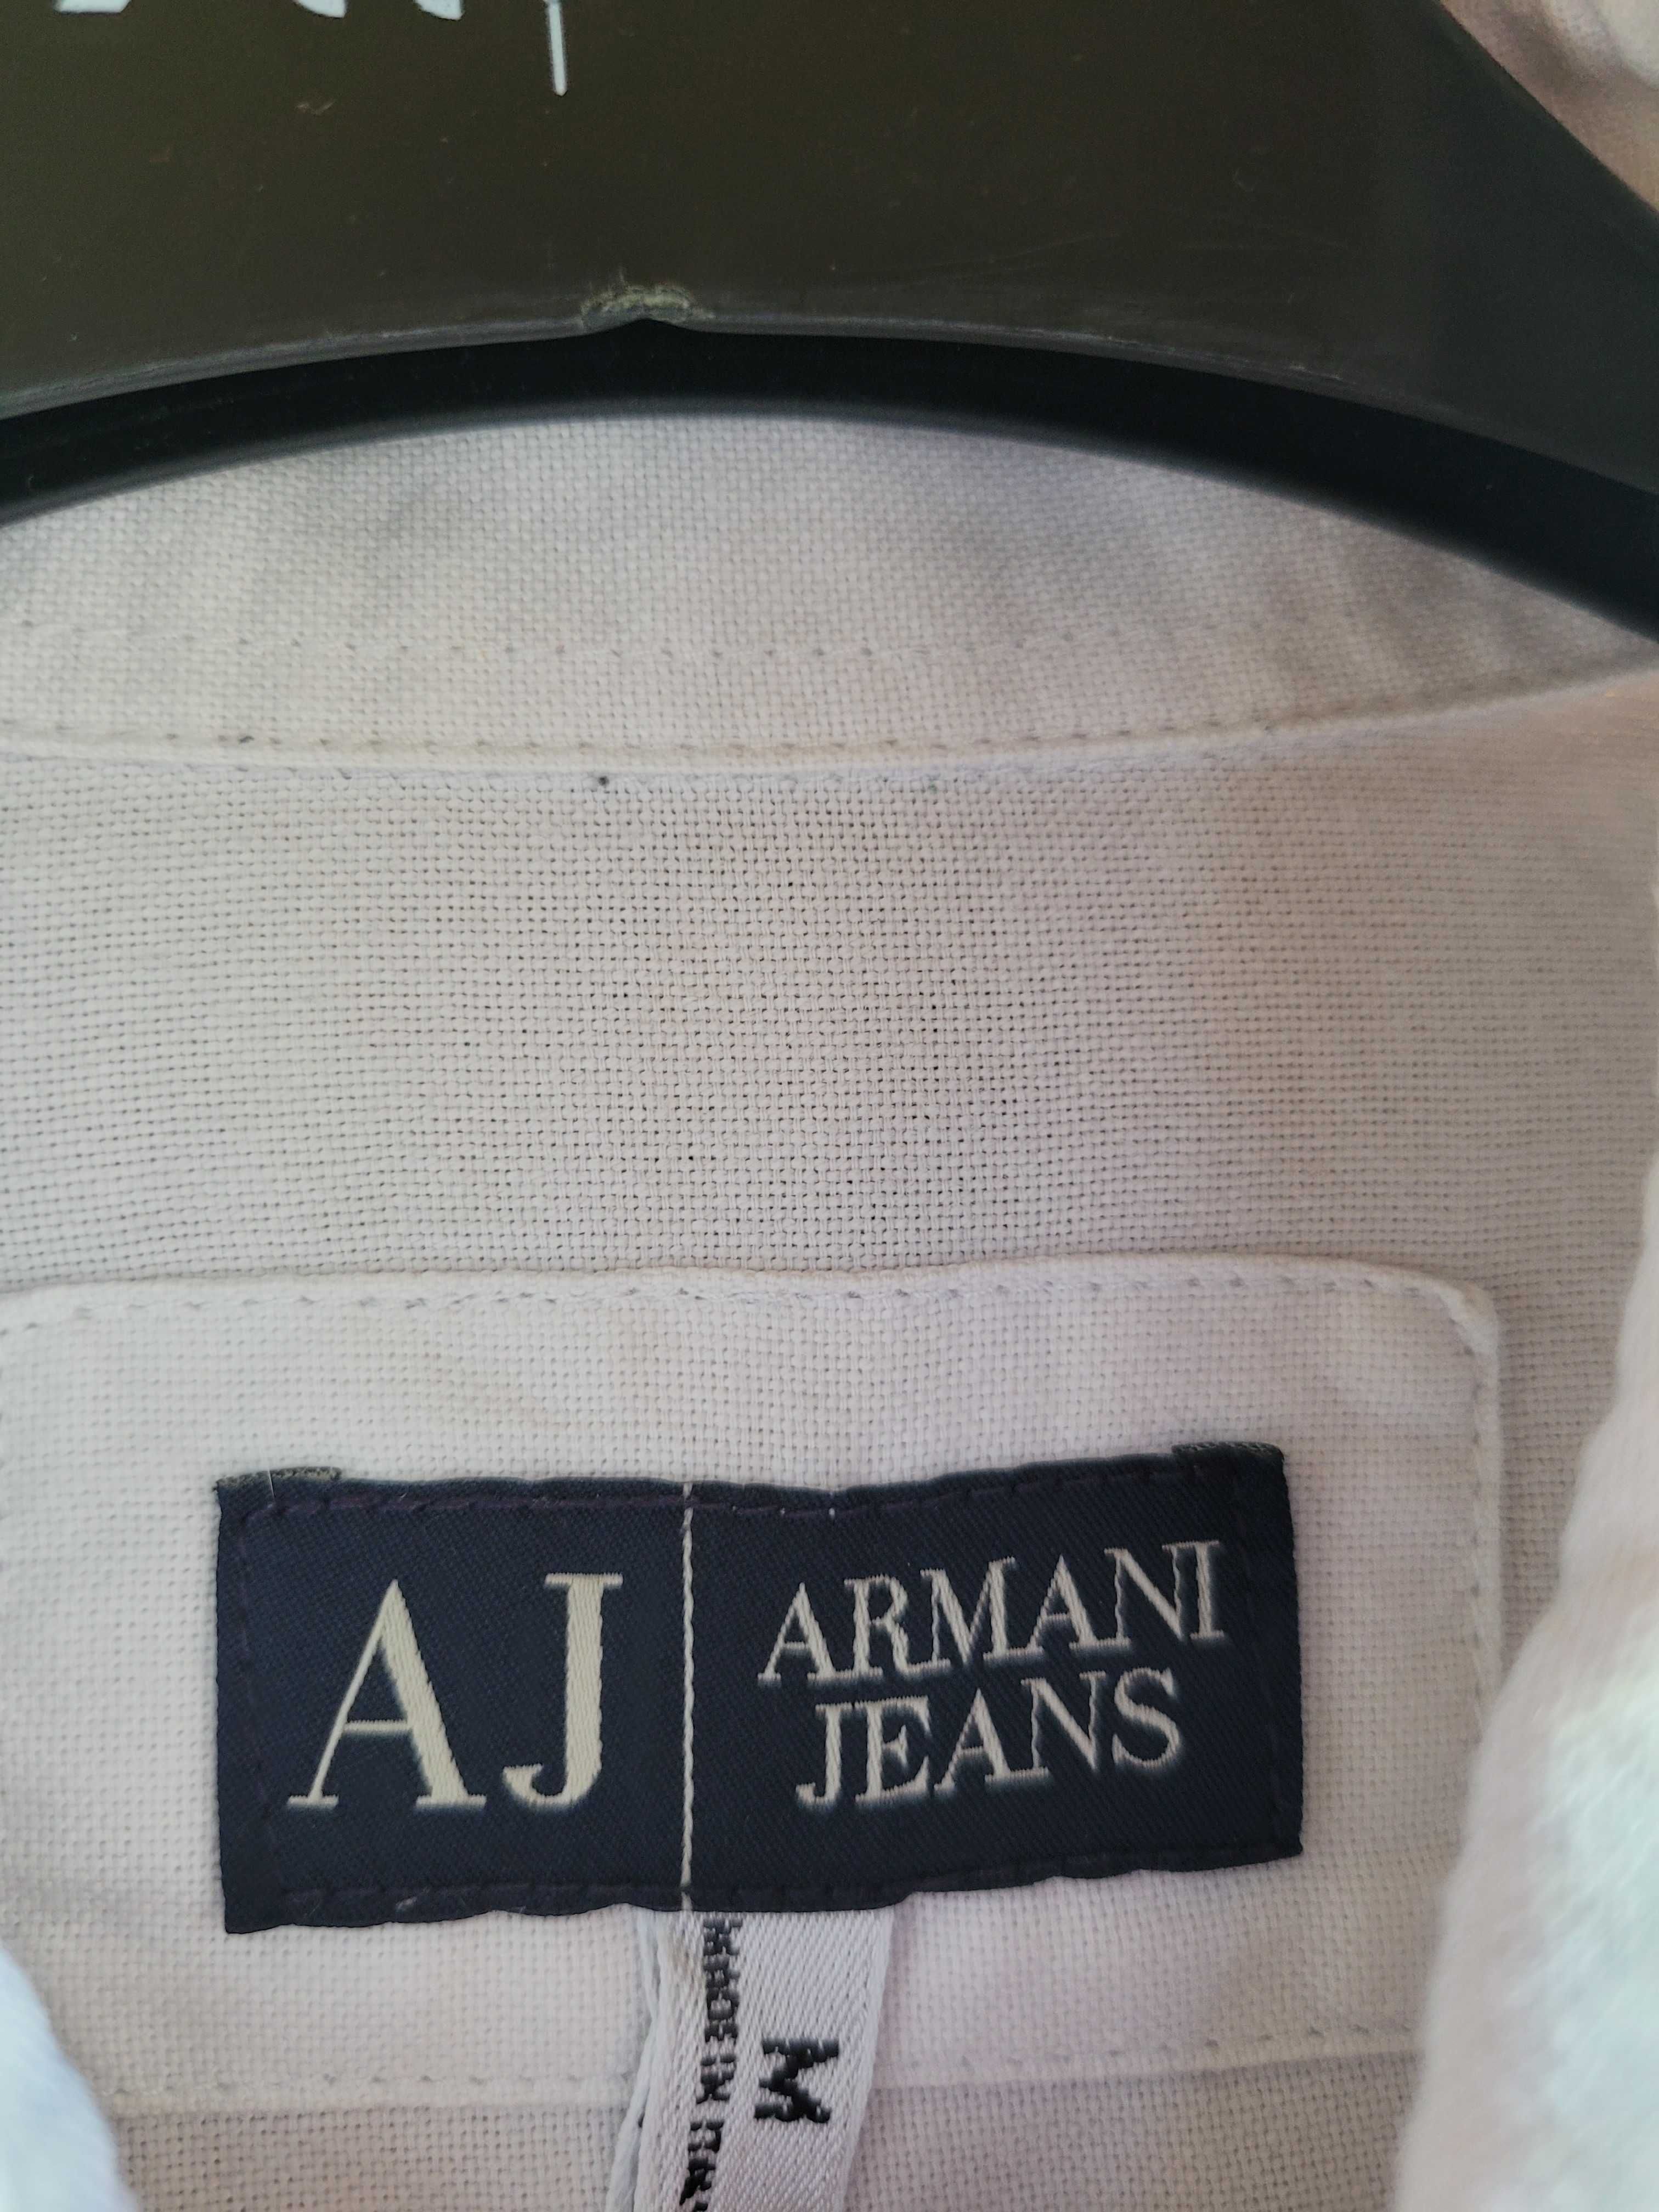 Koszula Aramani Jeans
M